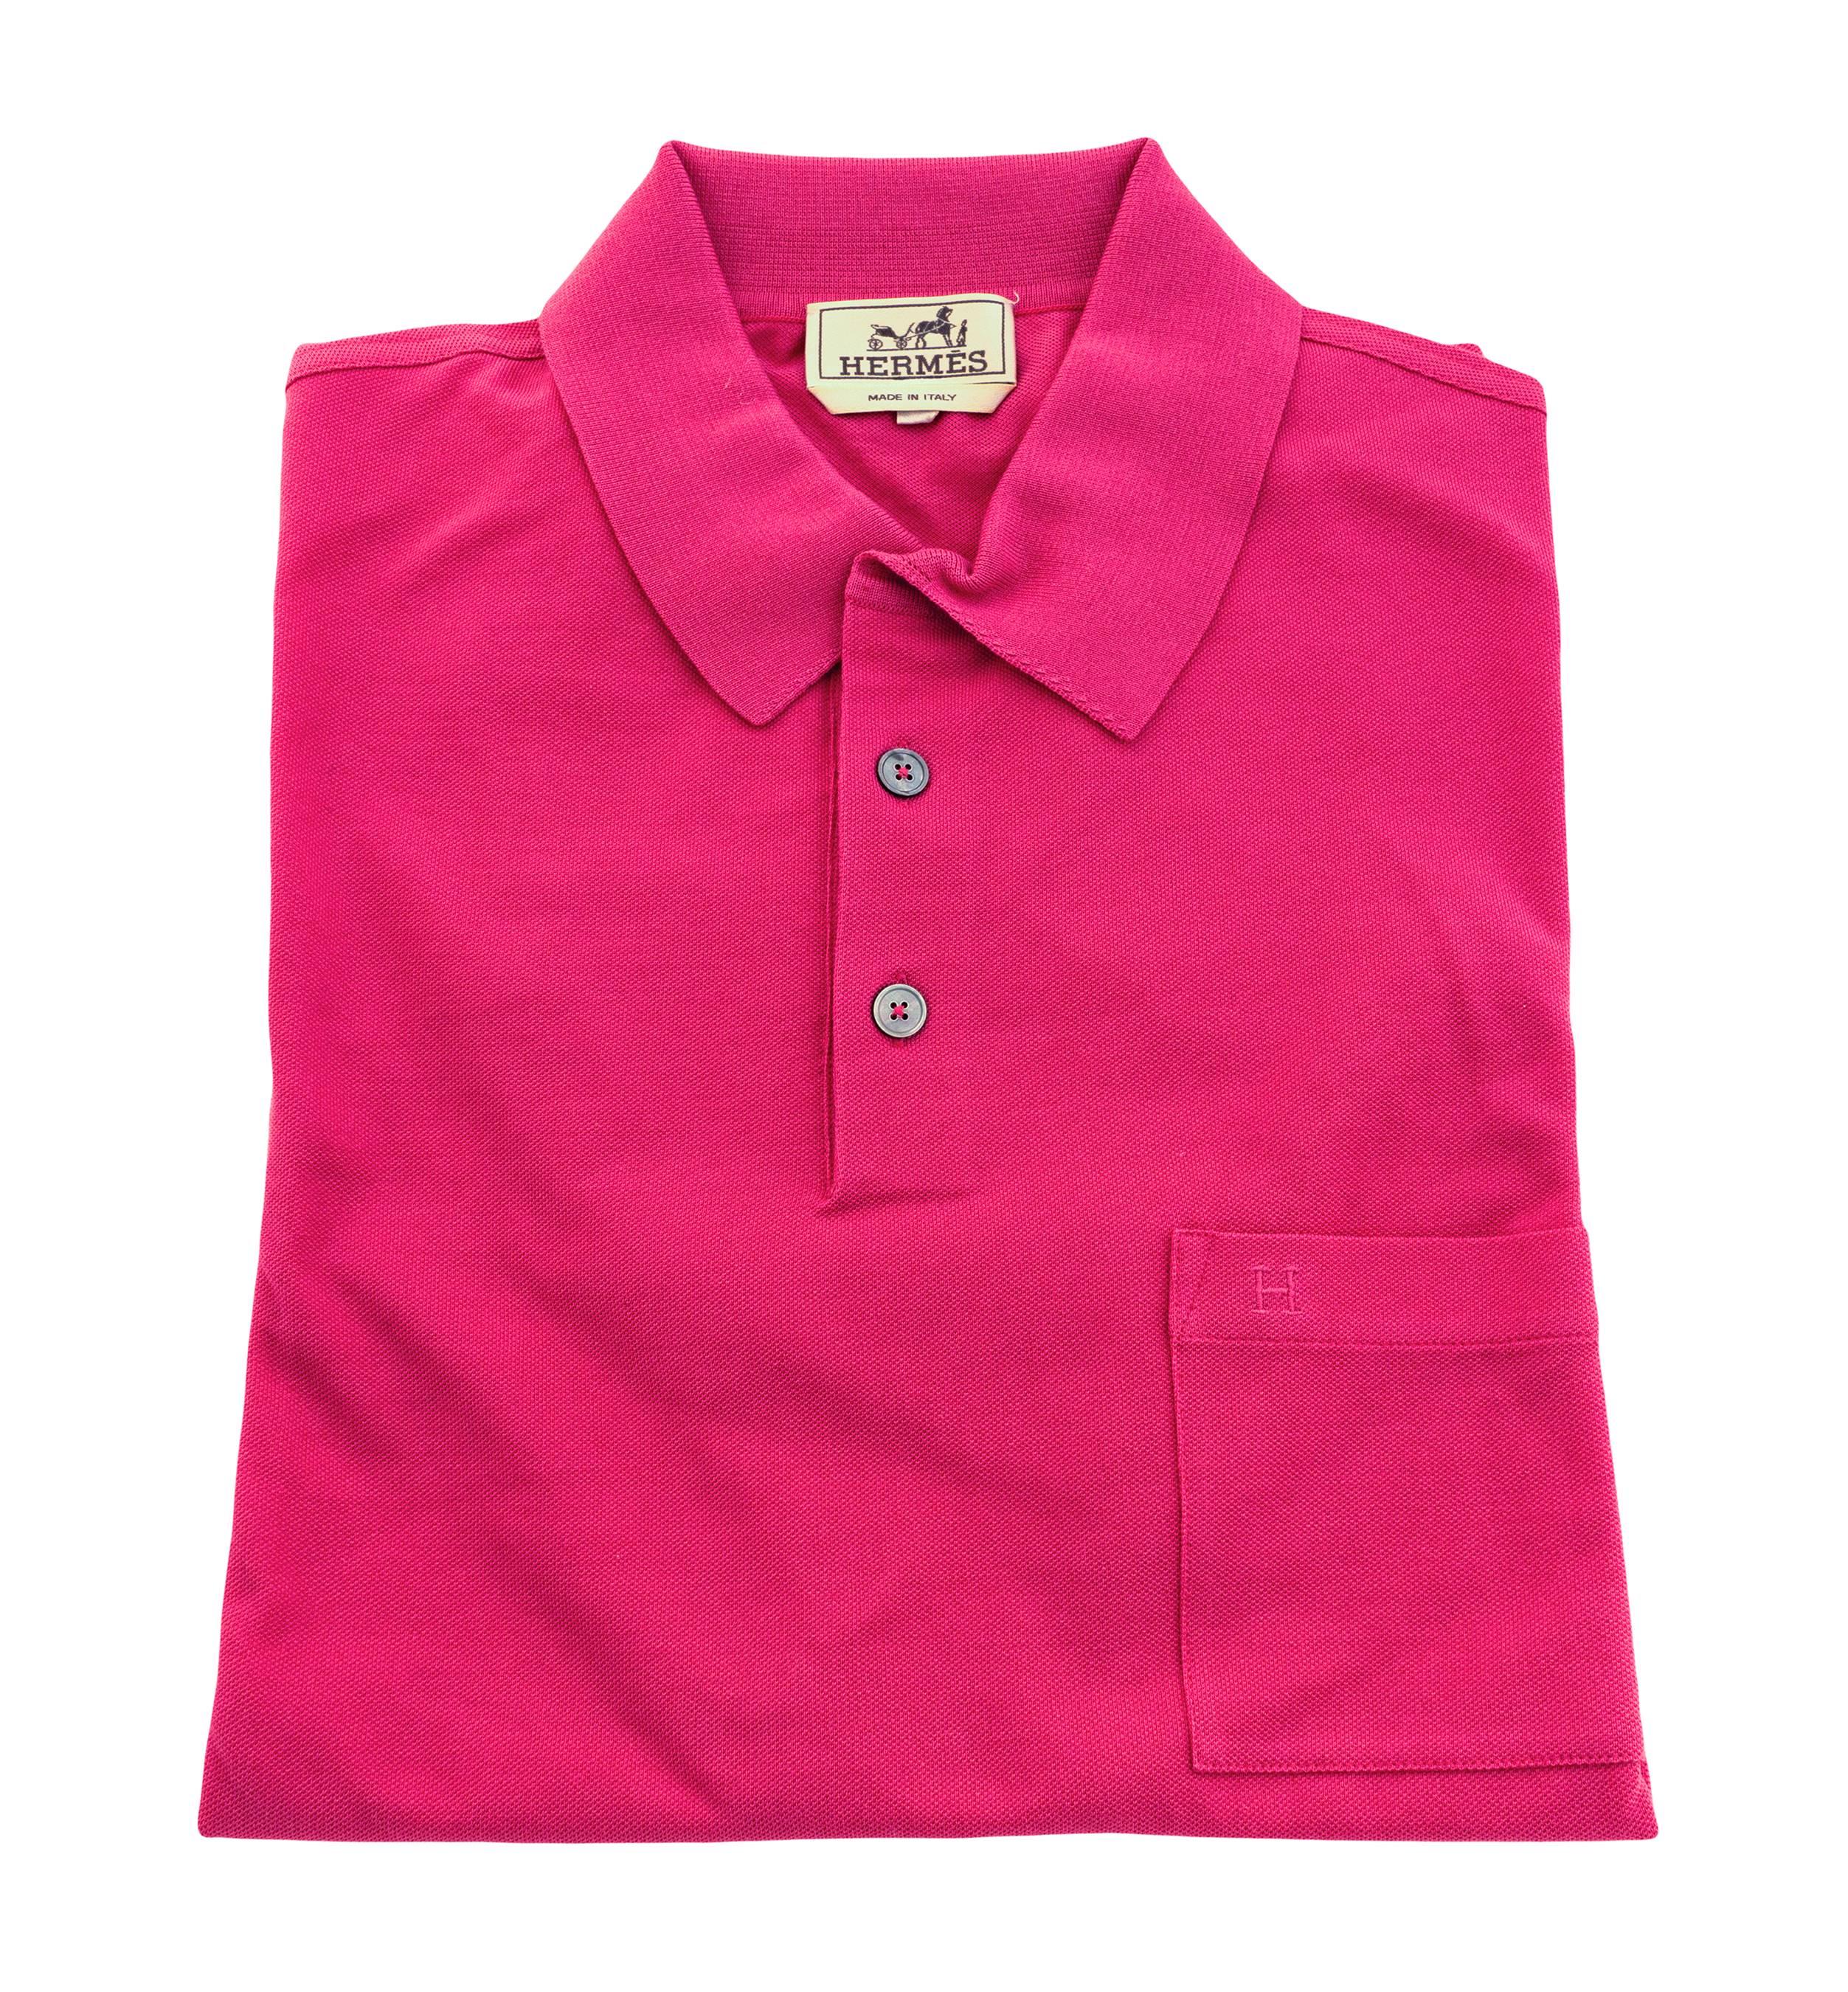 hot pink men's polo shirt